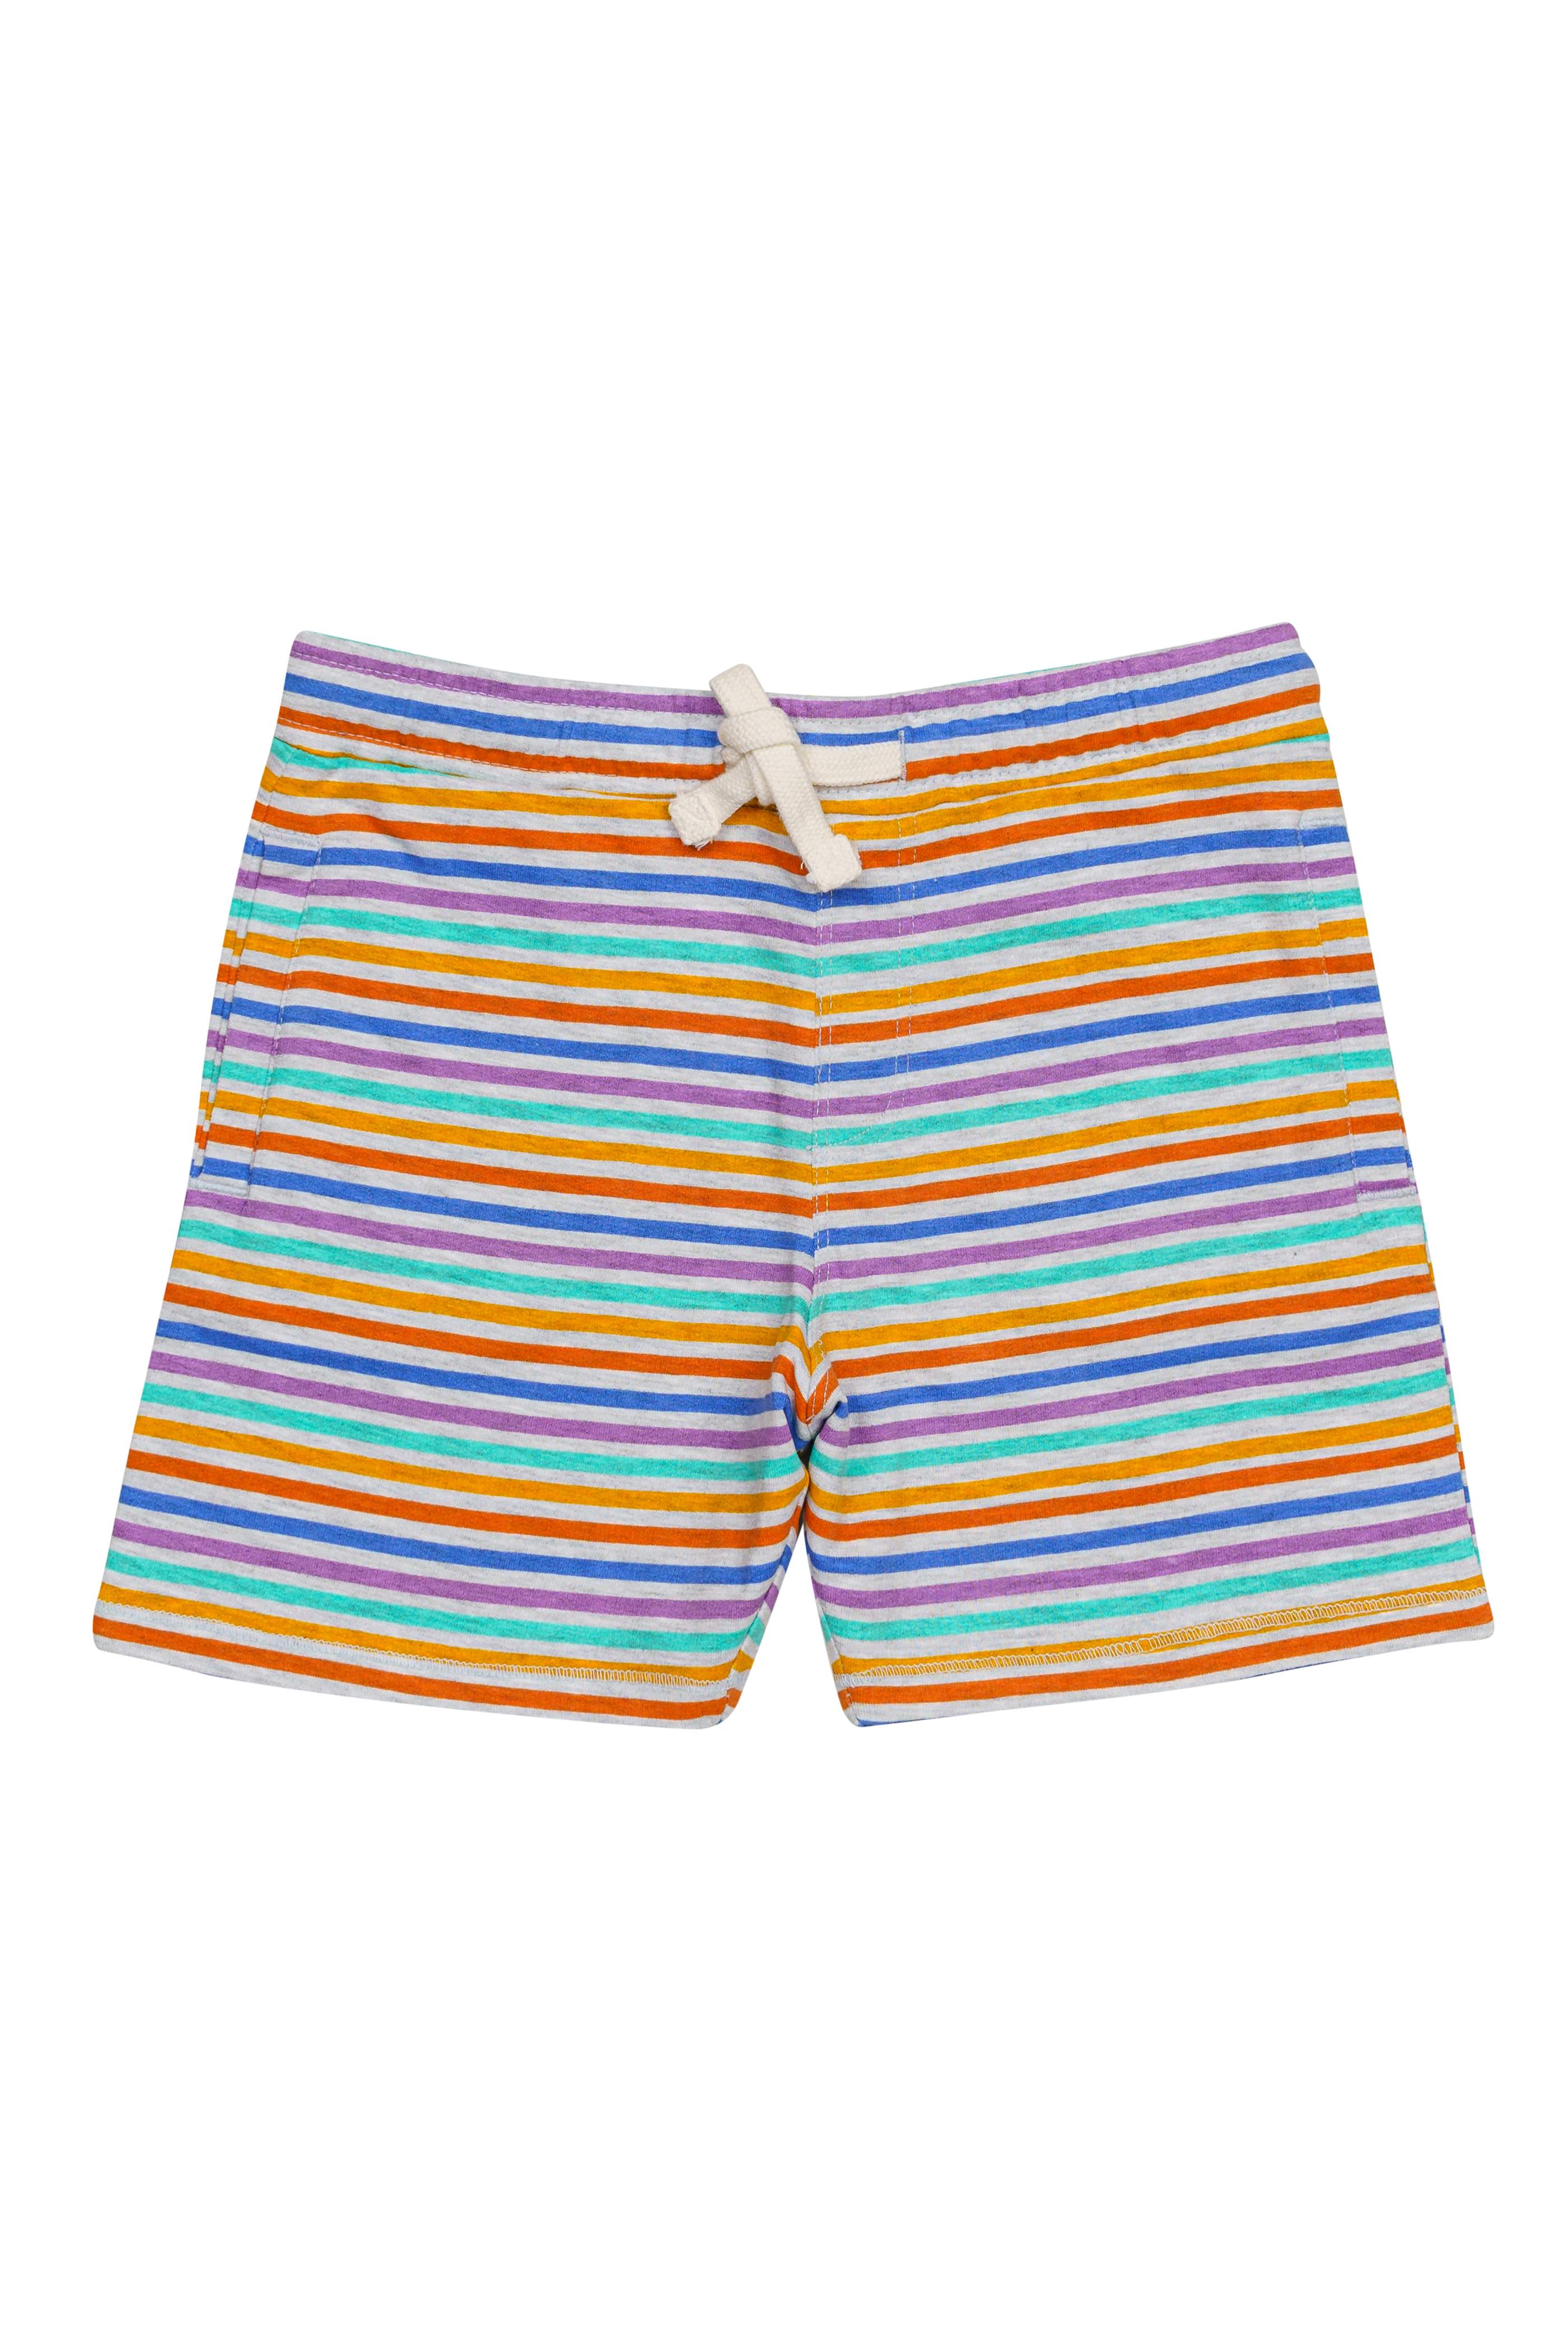 H by Hamleys Boys Striped Multicolor Basic Shorts